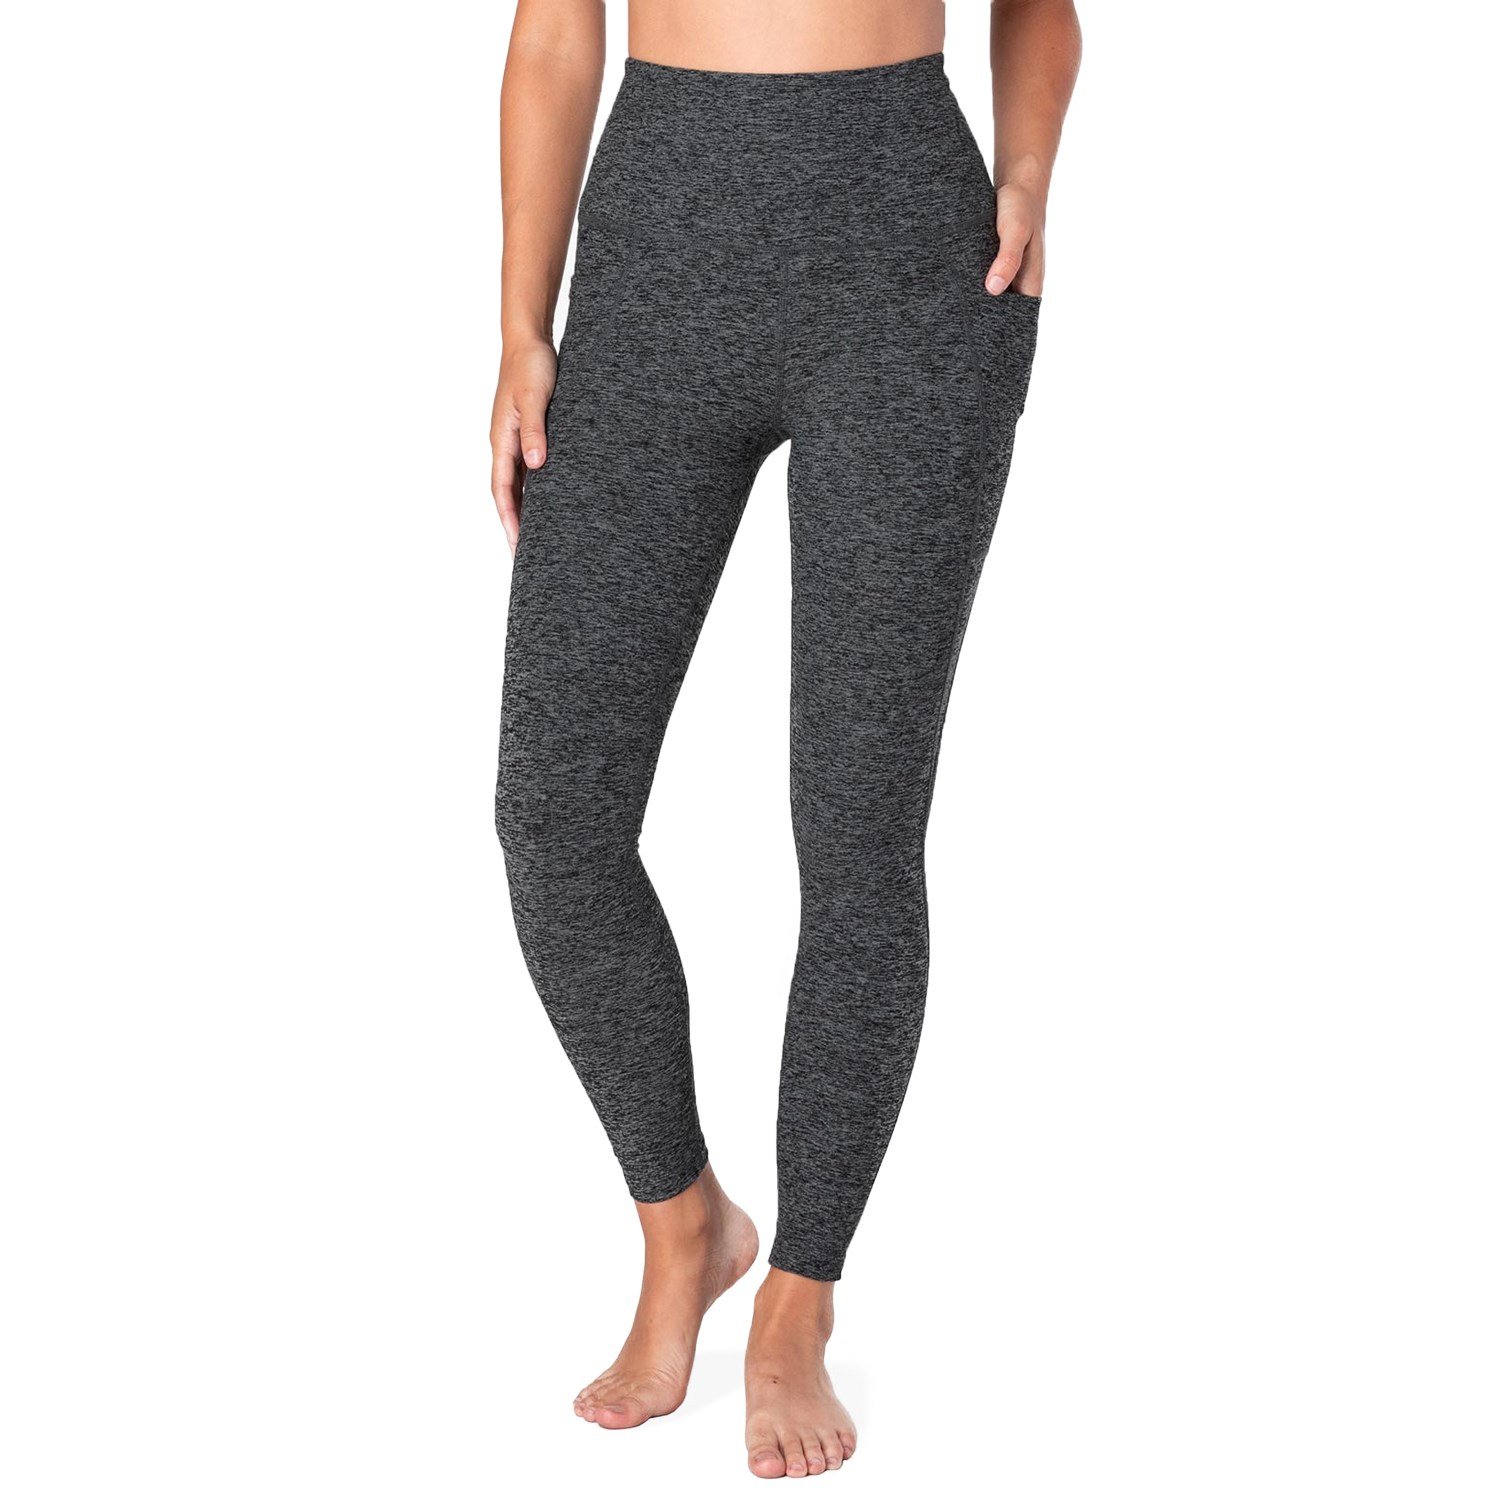 https://images.evo.com/imgp/zoom/163870/807622/beyond-yoga-spacedye-out-of-pocket-high-waisted-midi-leggings-women-s-.jpg